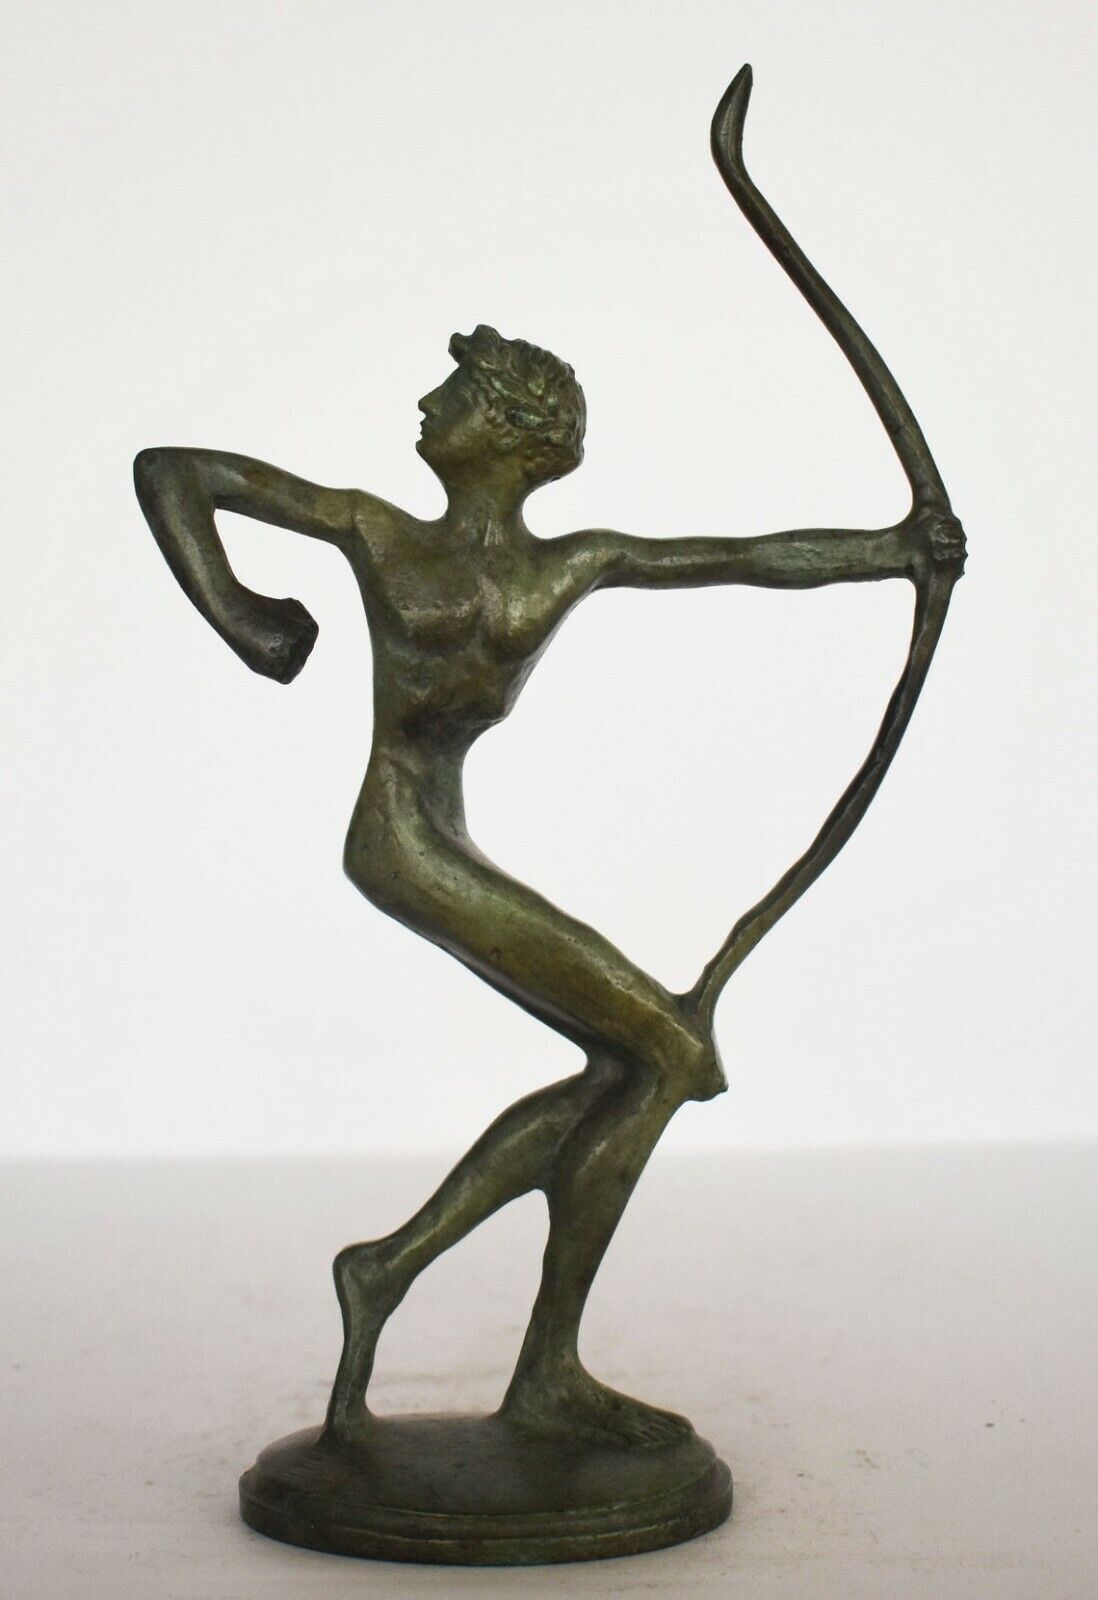 Archer small figure - Olympic Games athlete - modern representation - Bronzε